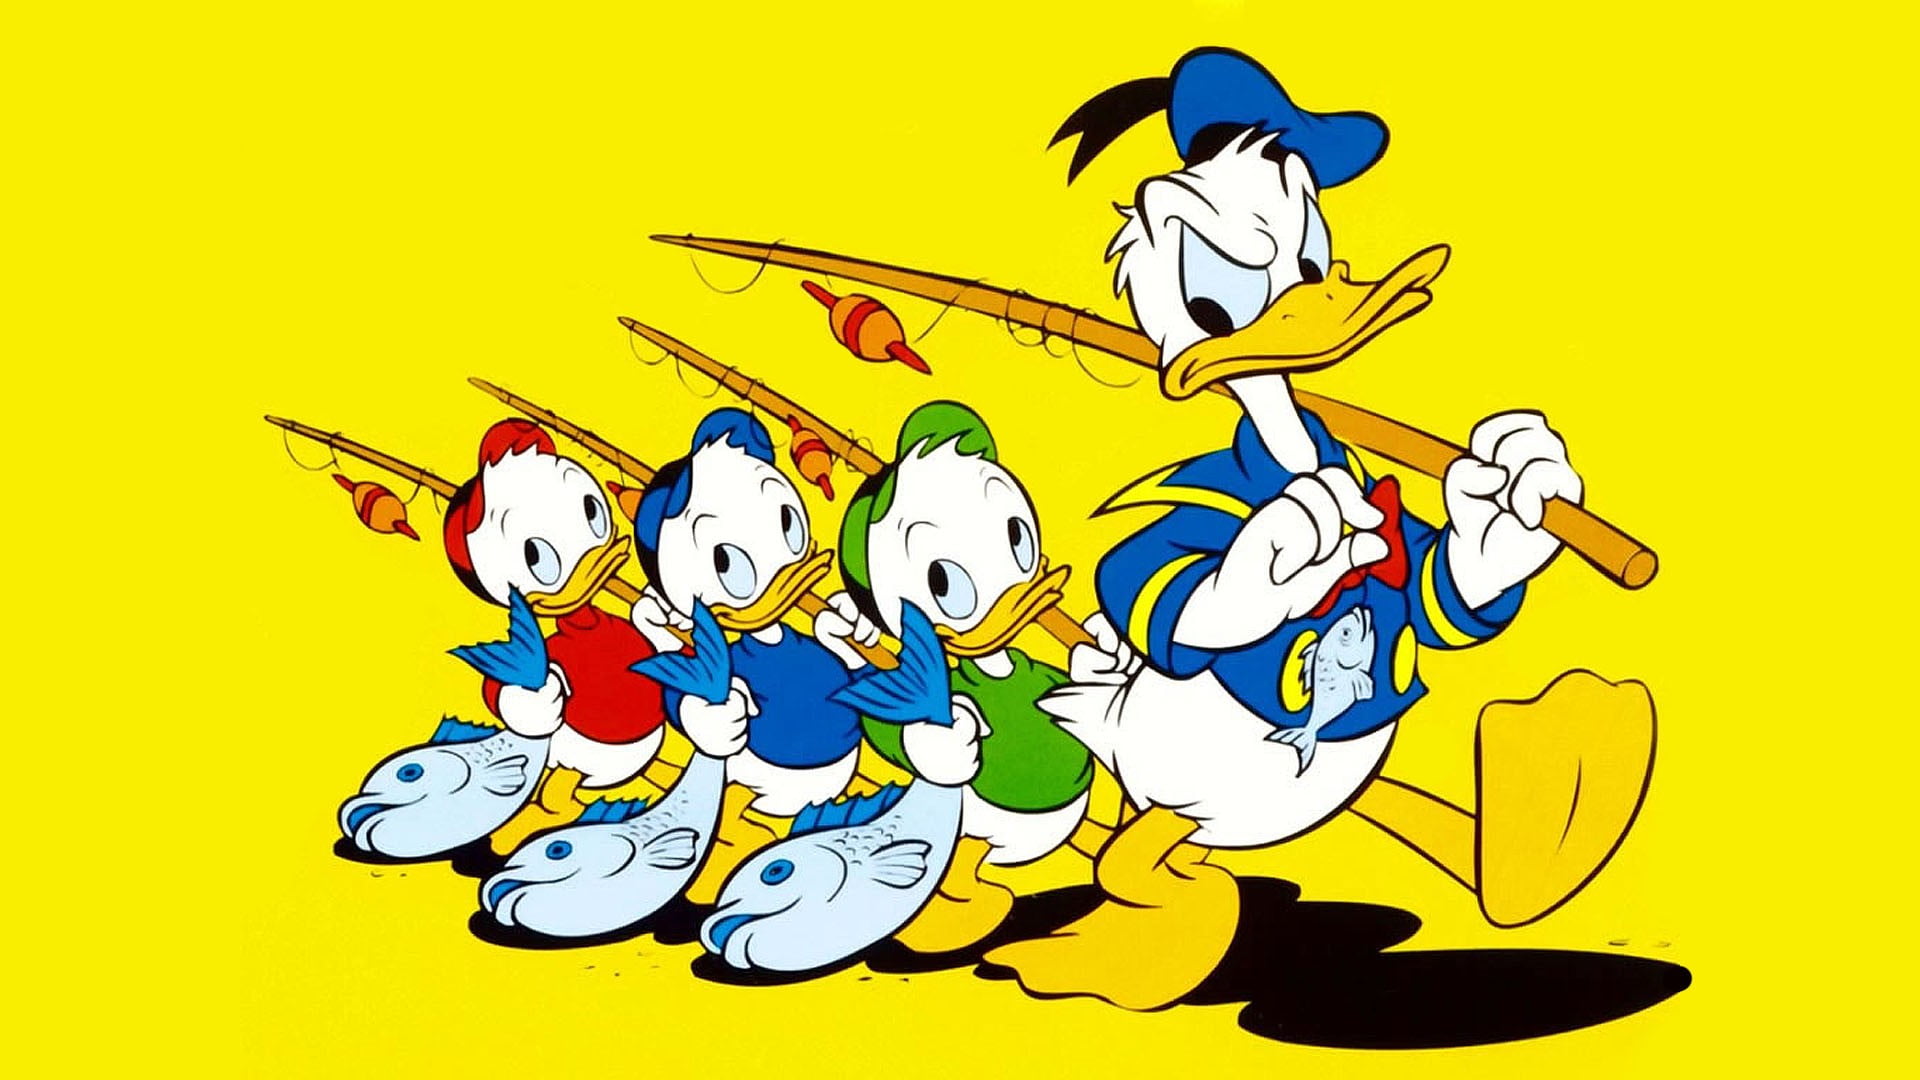 Donald duck character, comics, Donald, Disney